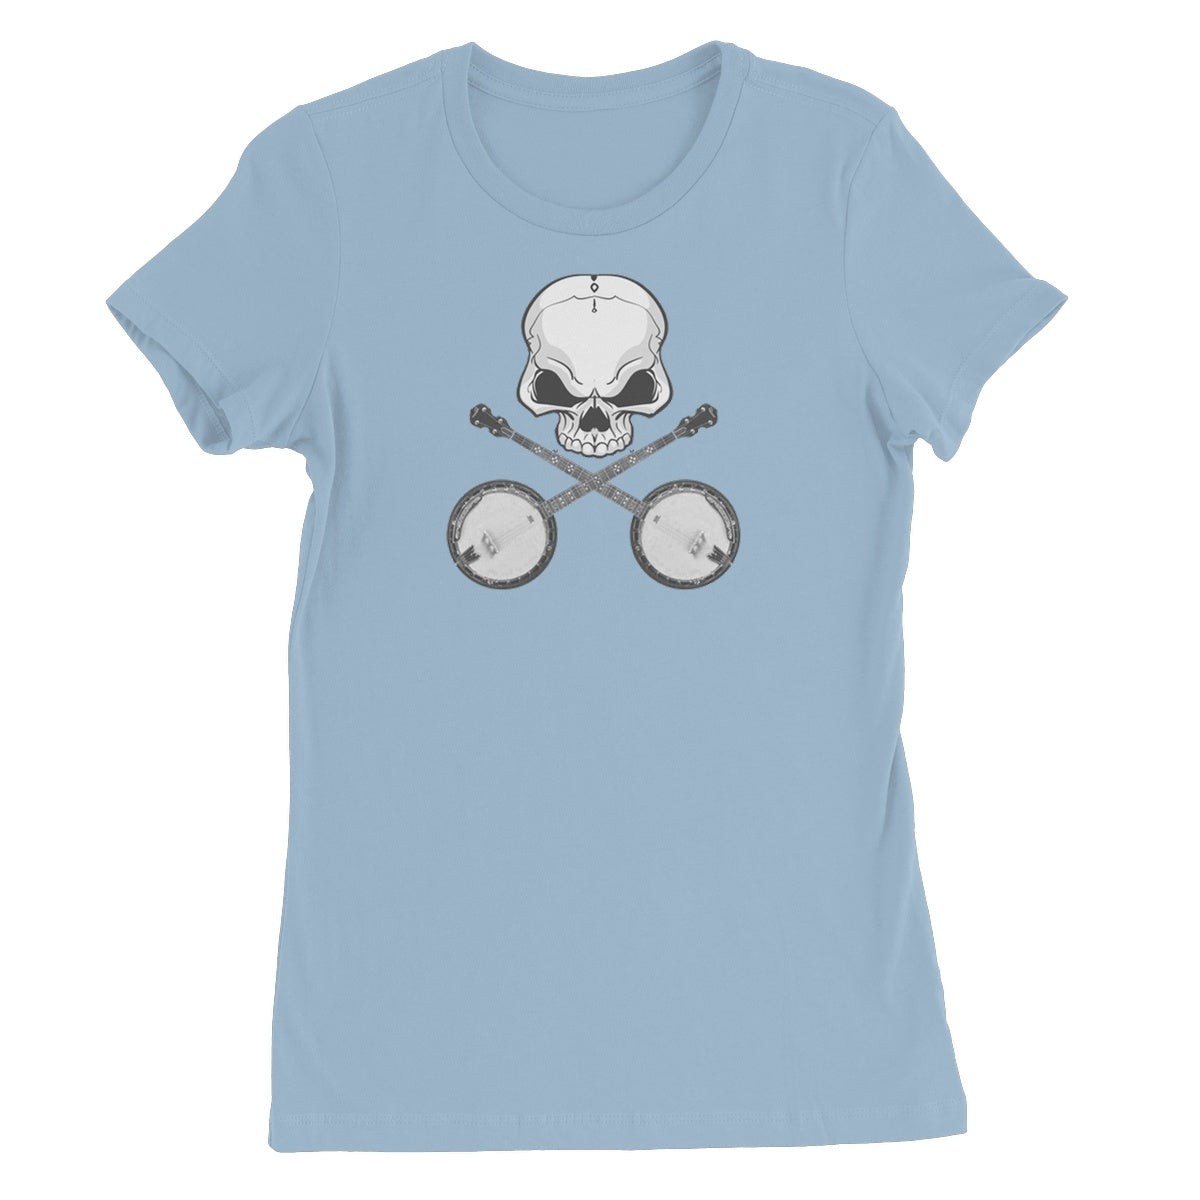 Skull and crossed Banjos Women's T-Shirt